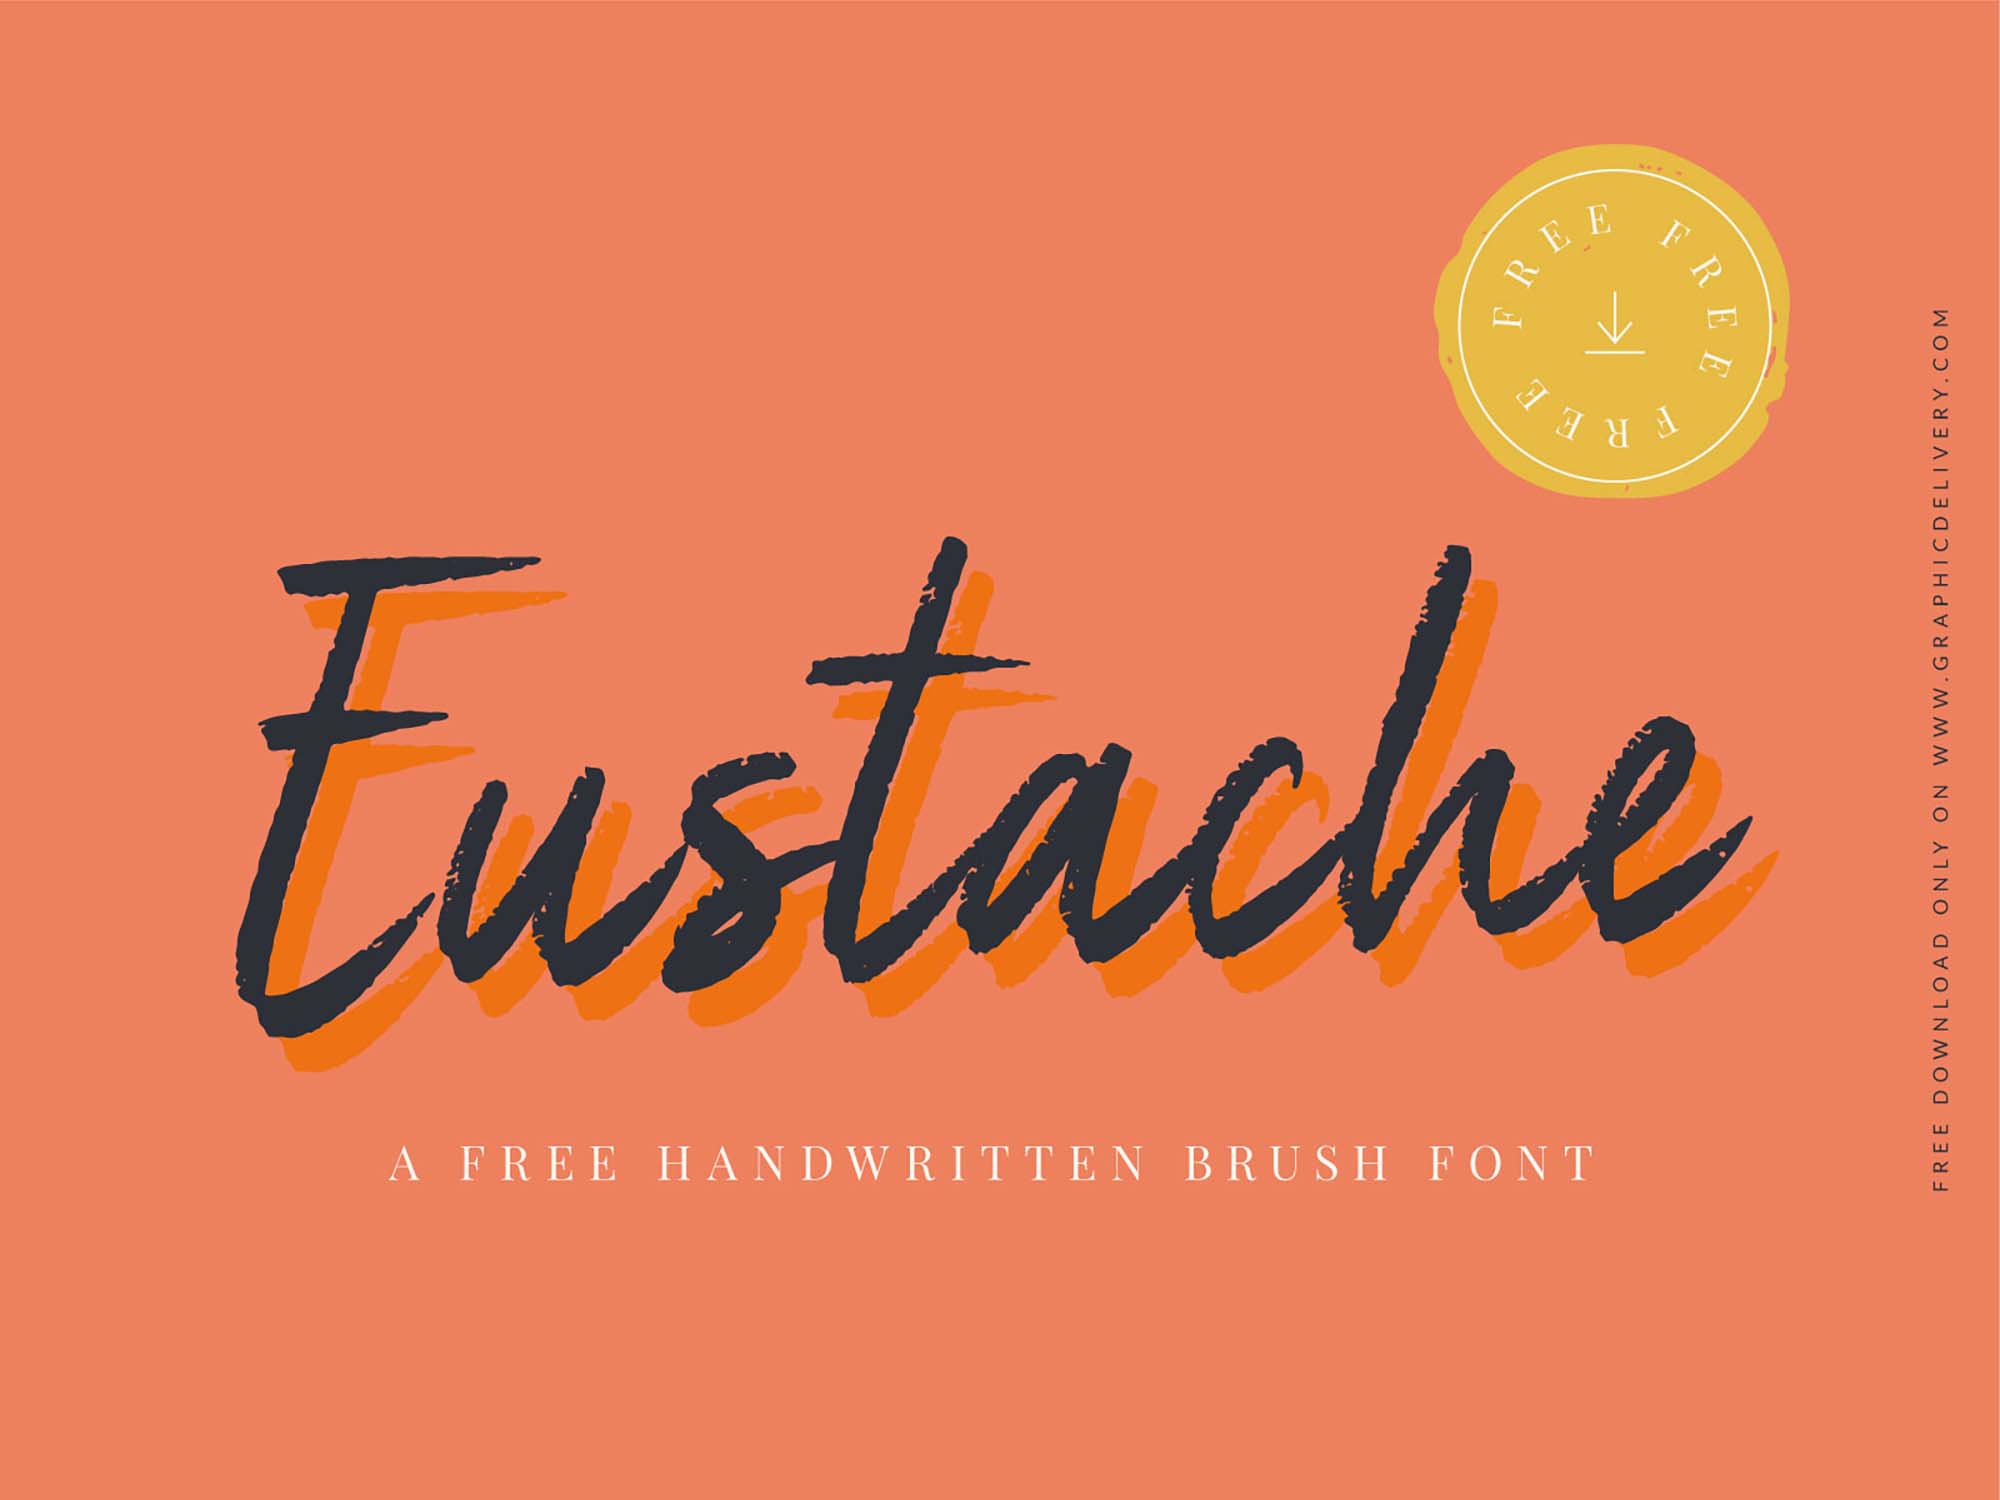 Eustache Brush Handwritten Font